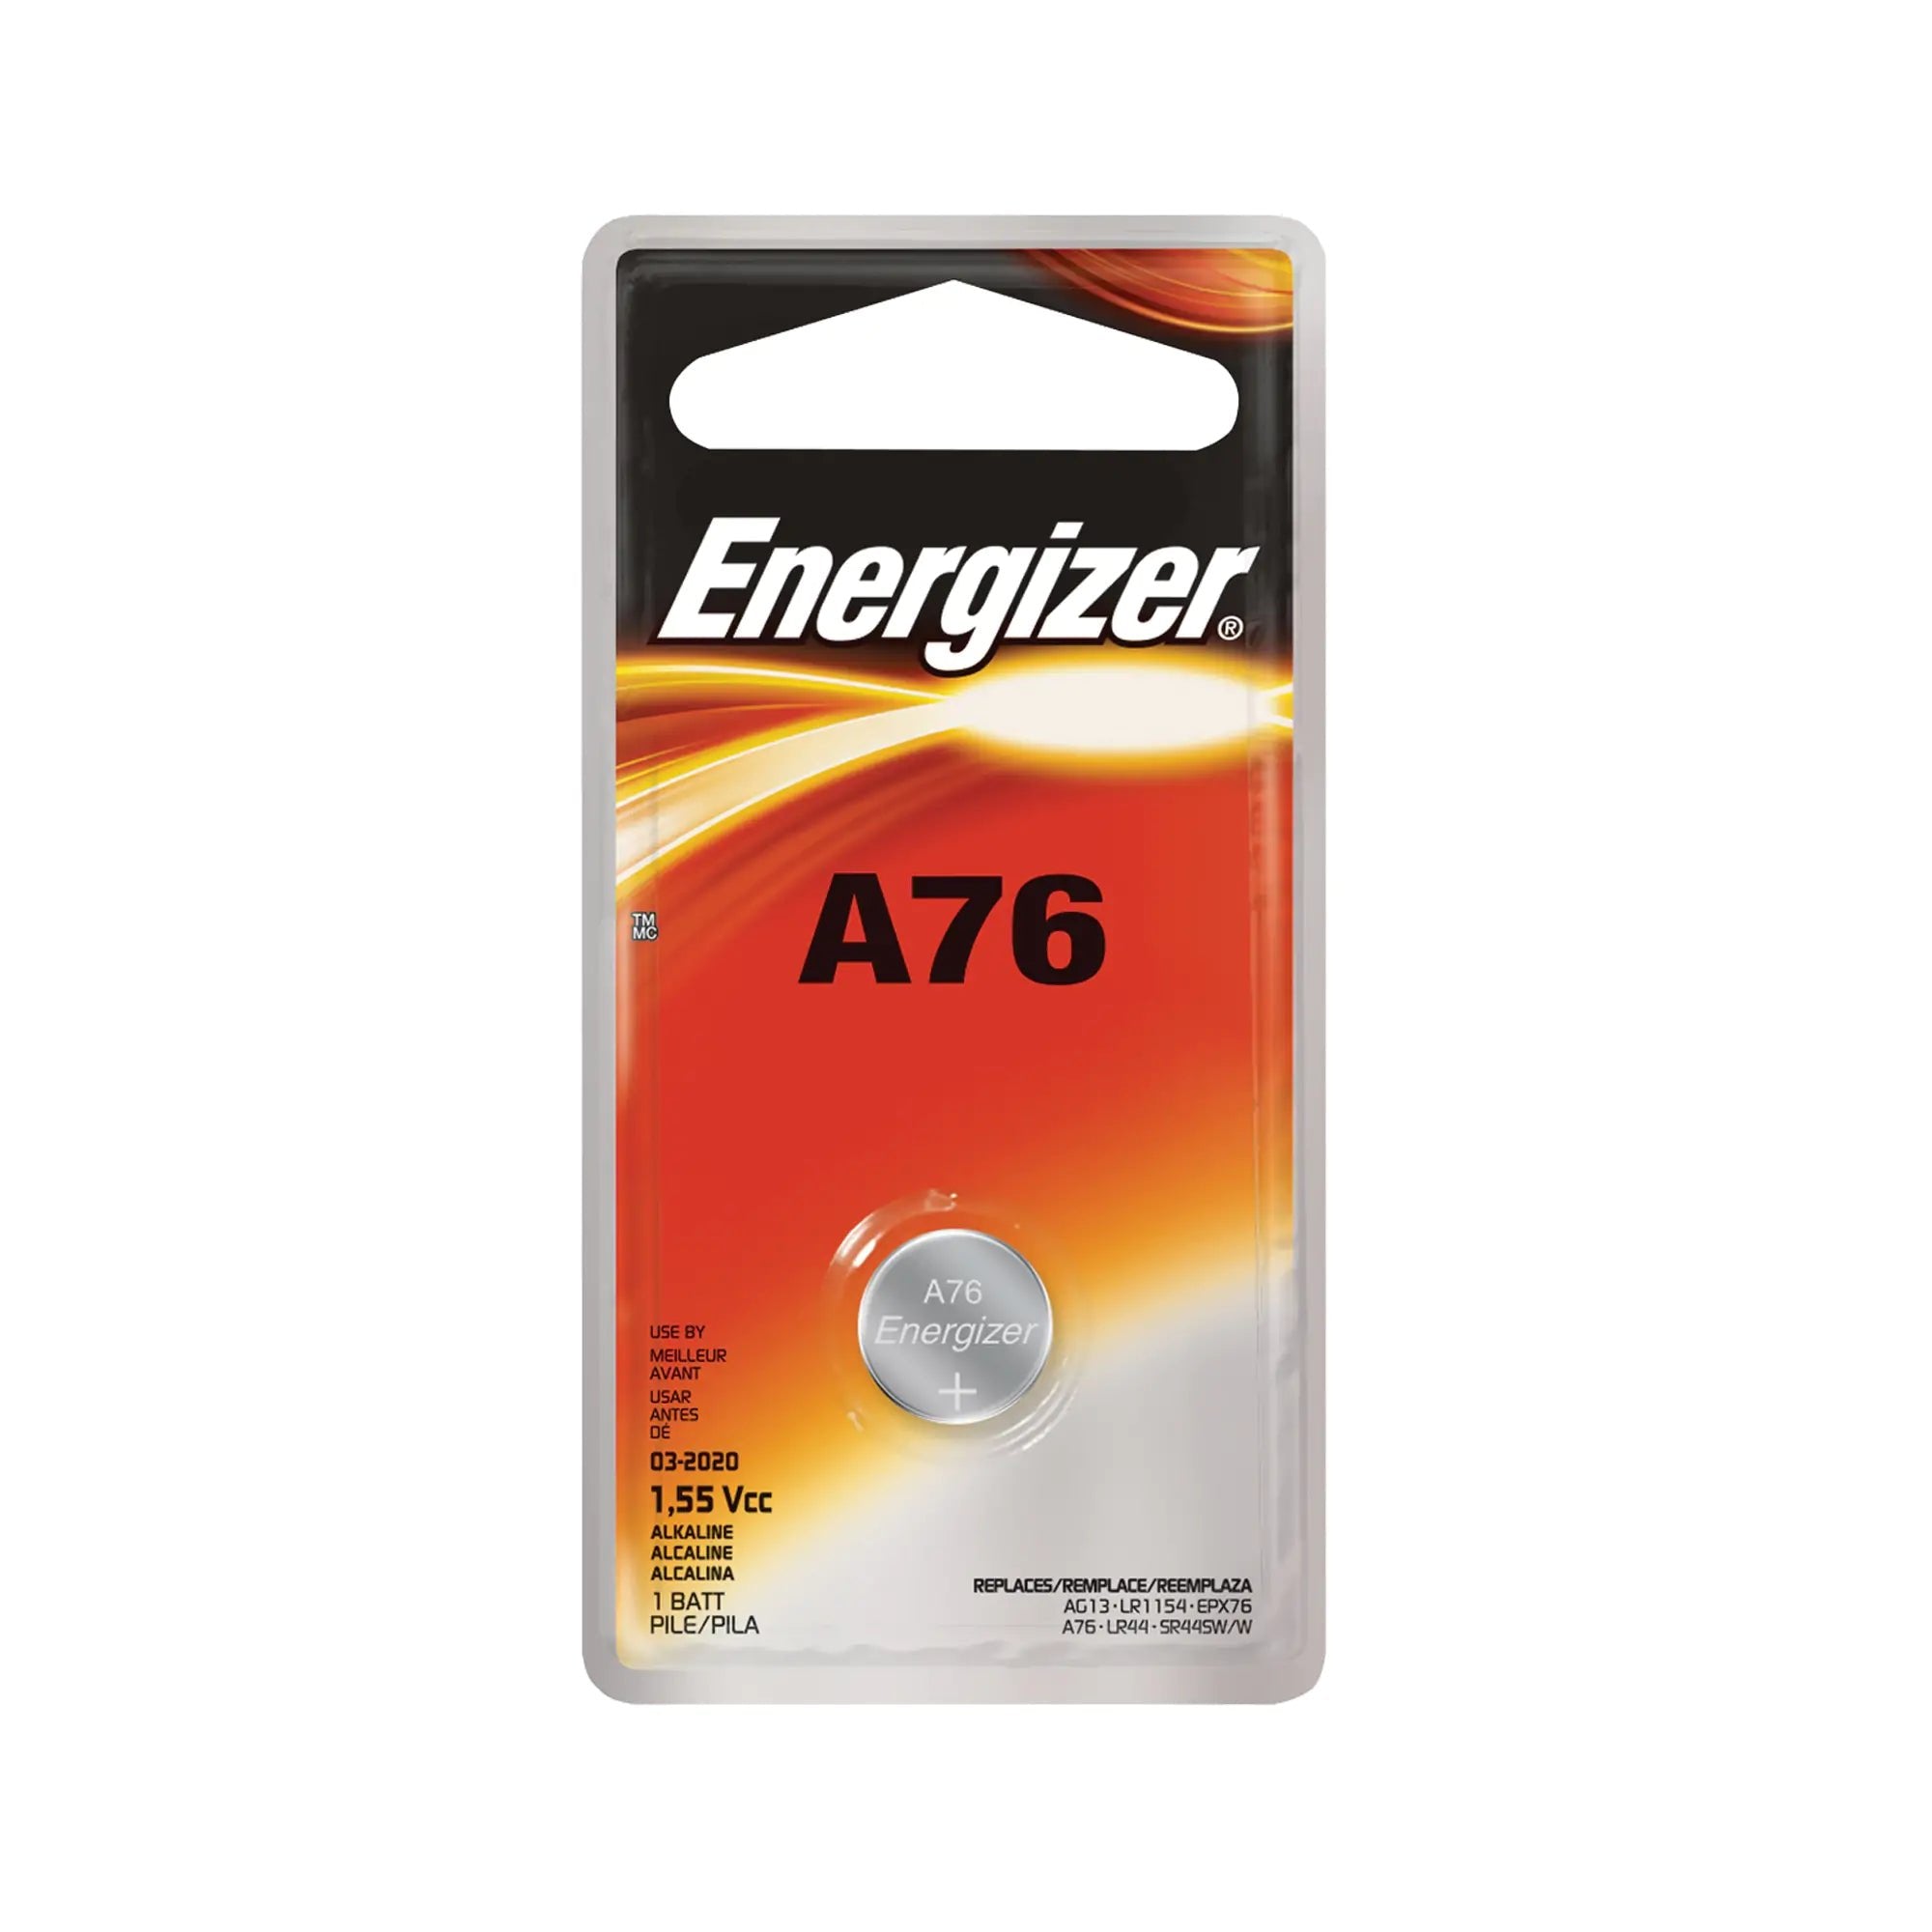 Energizer A76BPZ - A76 Alkaline Battery, 1.5 V